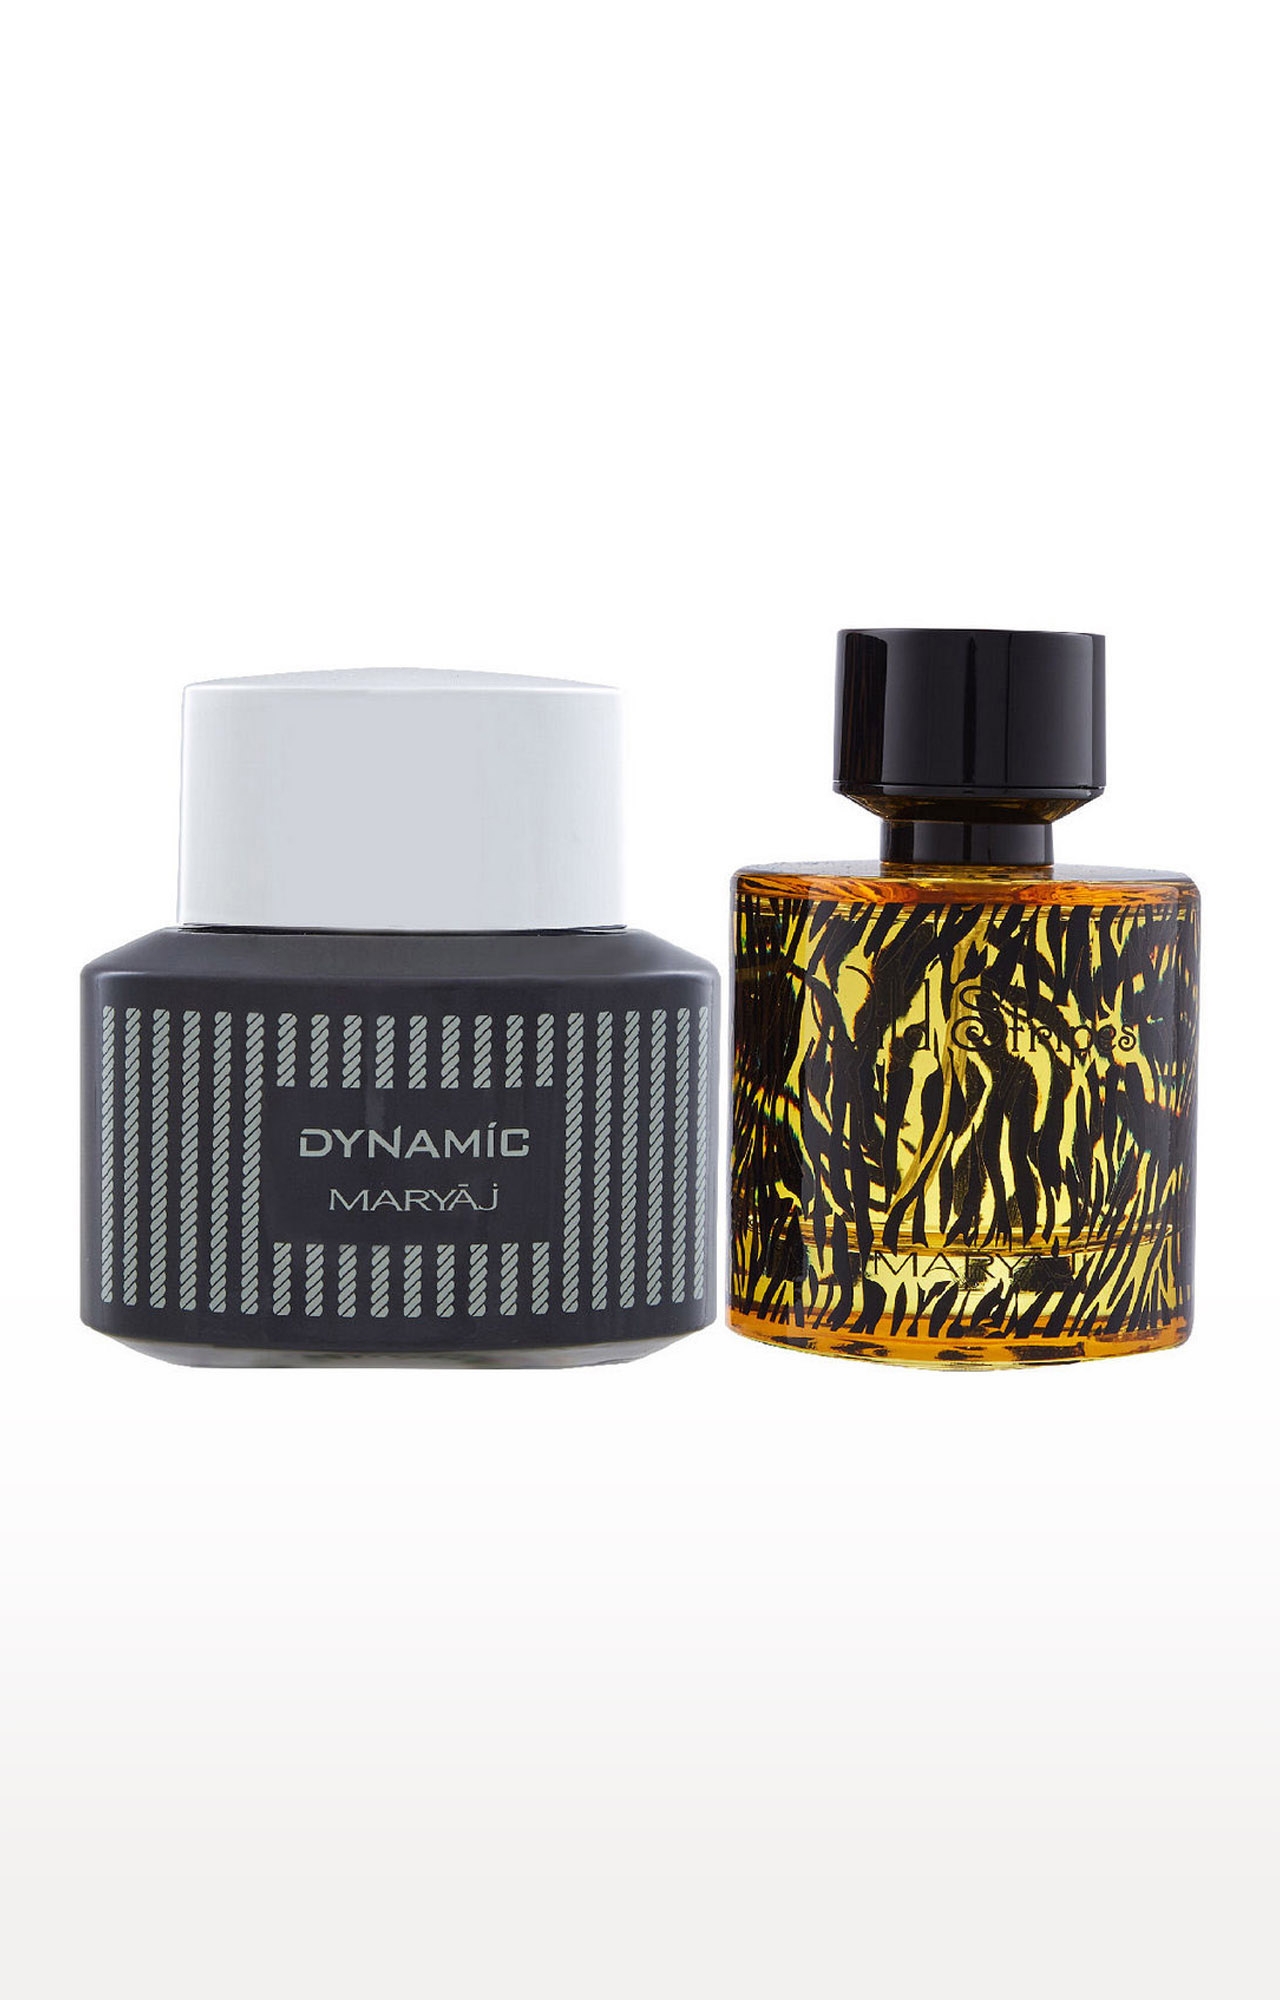 Maryaj Dynamic Eau De Parfum Perfume 100ml for Men and Maryaj Wild Stripes Eau De Parfum Oriental Perfume 100ml for Men